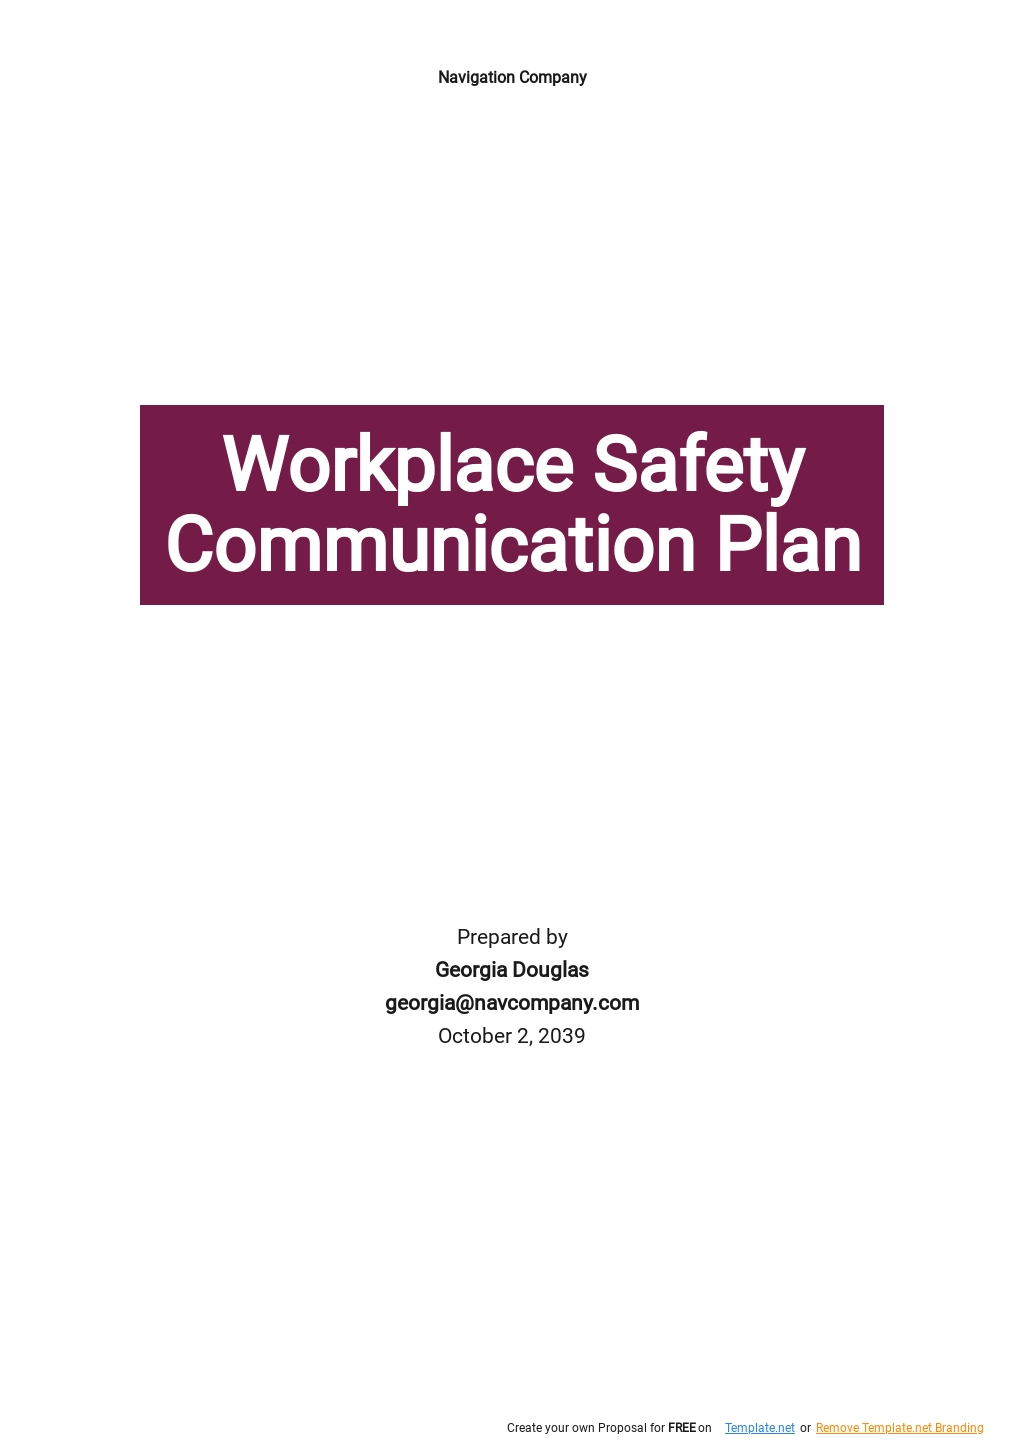 Workplace Safety Communication Plan Template.jpe